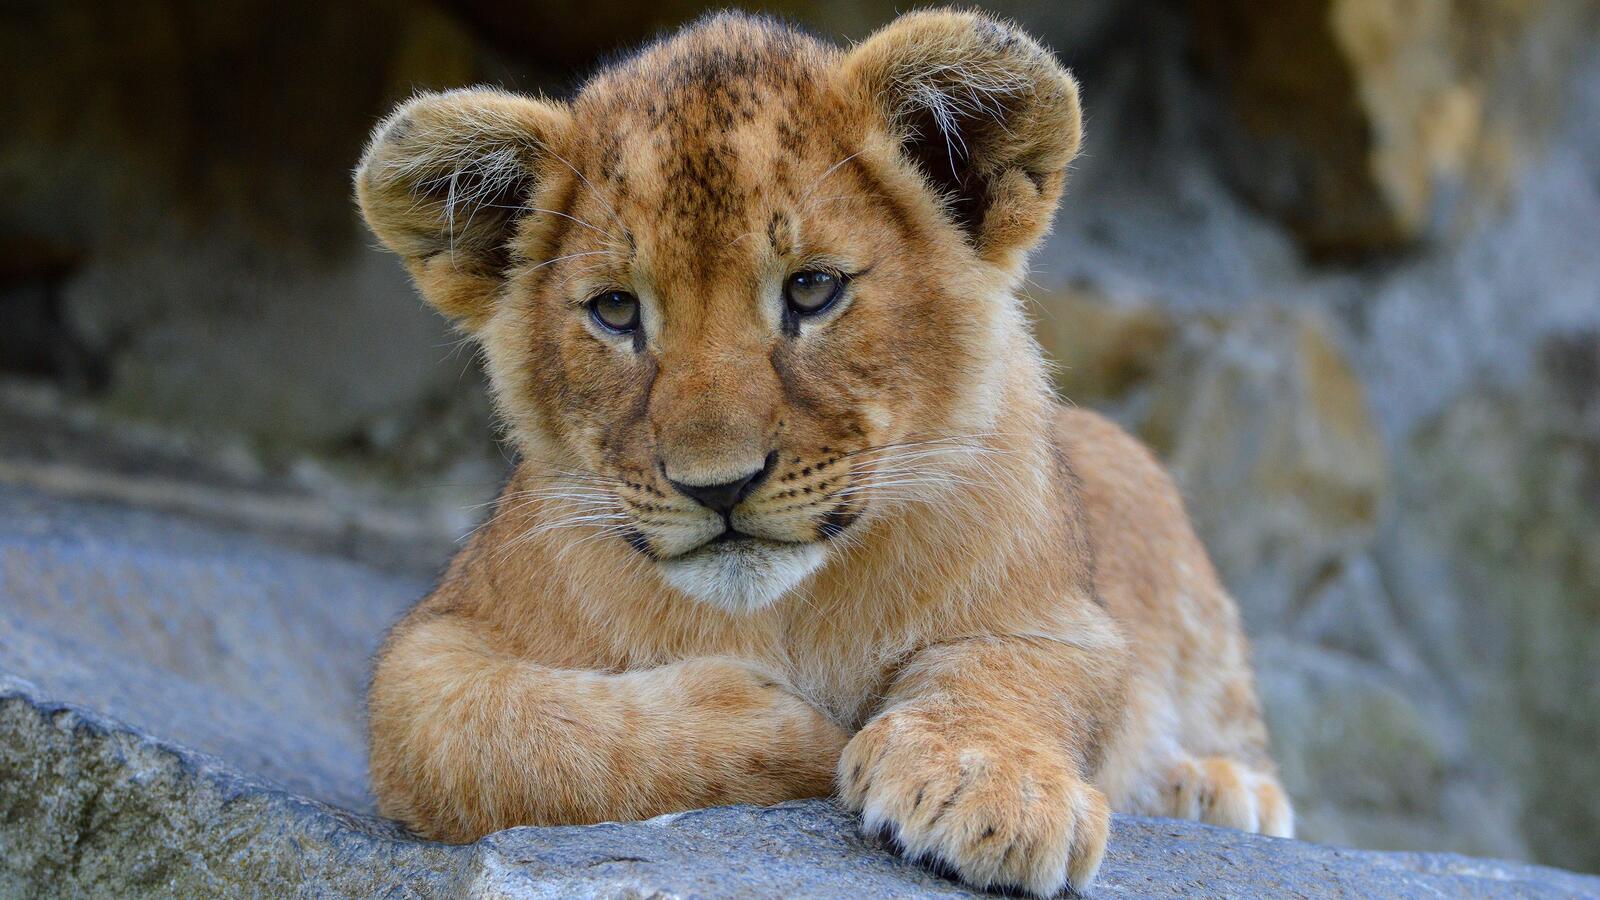 Free photo The little lion cub lies on a rock